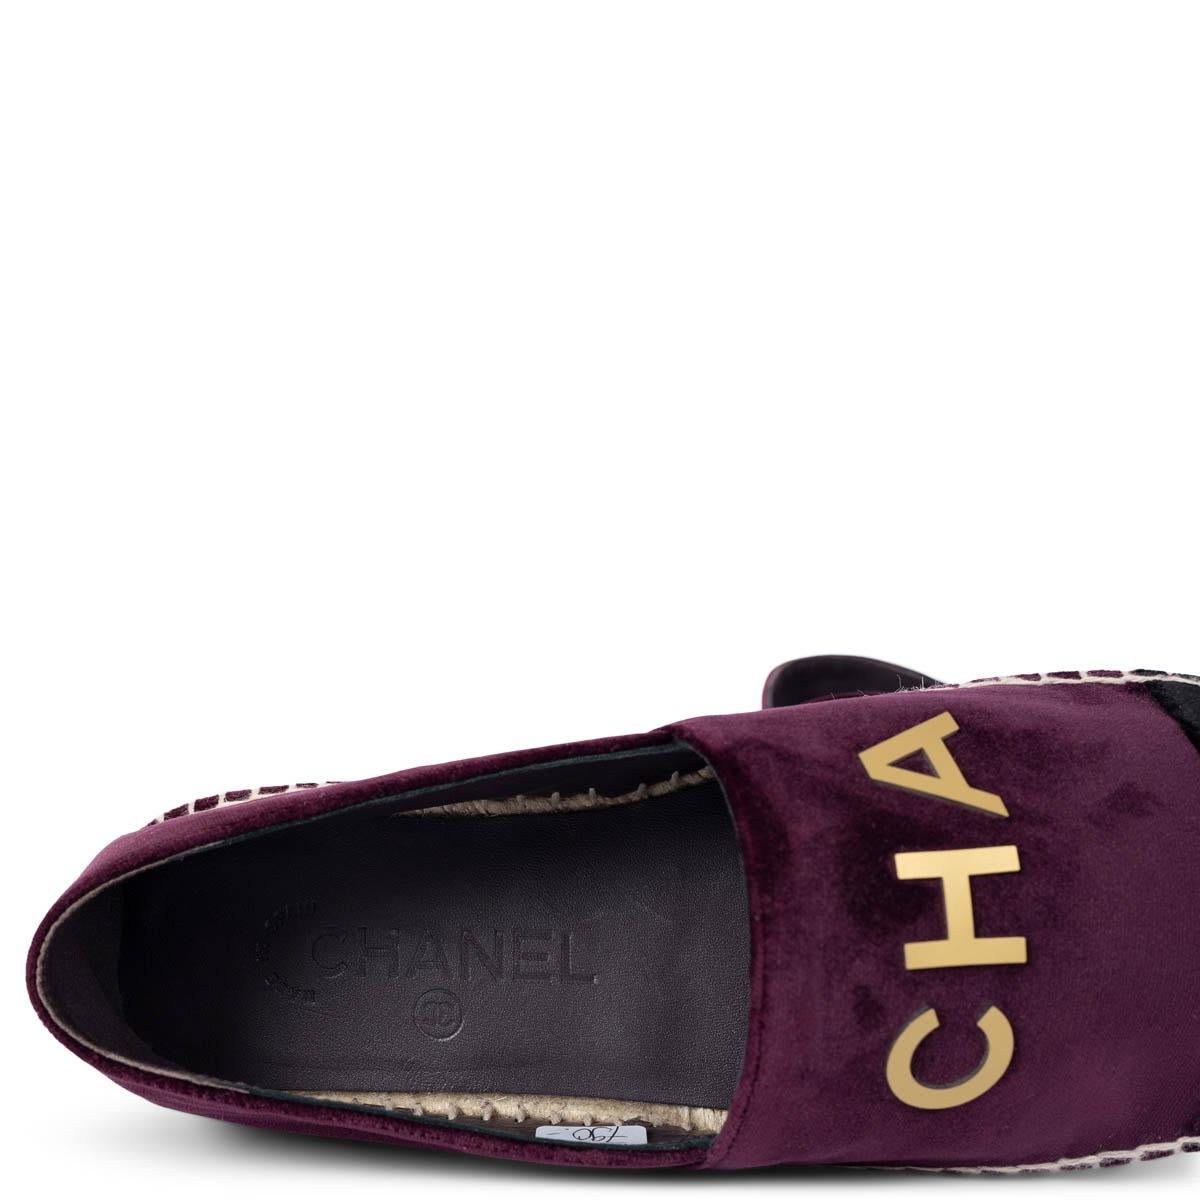 CHANEL eggplant suede 2018 18B LOGO ESPADRILLE Flats Shoes 37 fit 36.5 For Sale 3